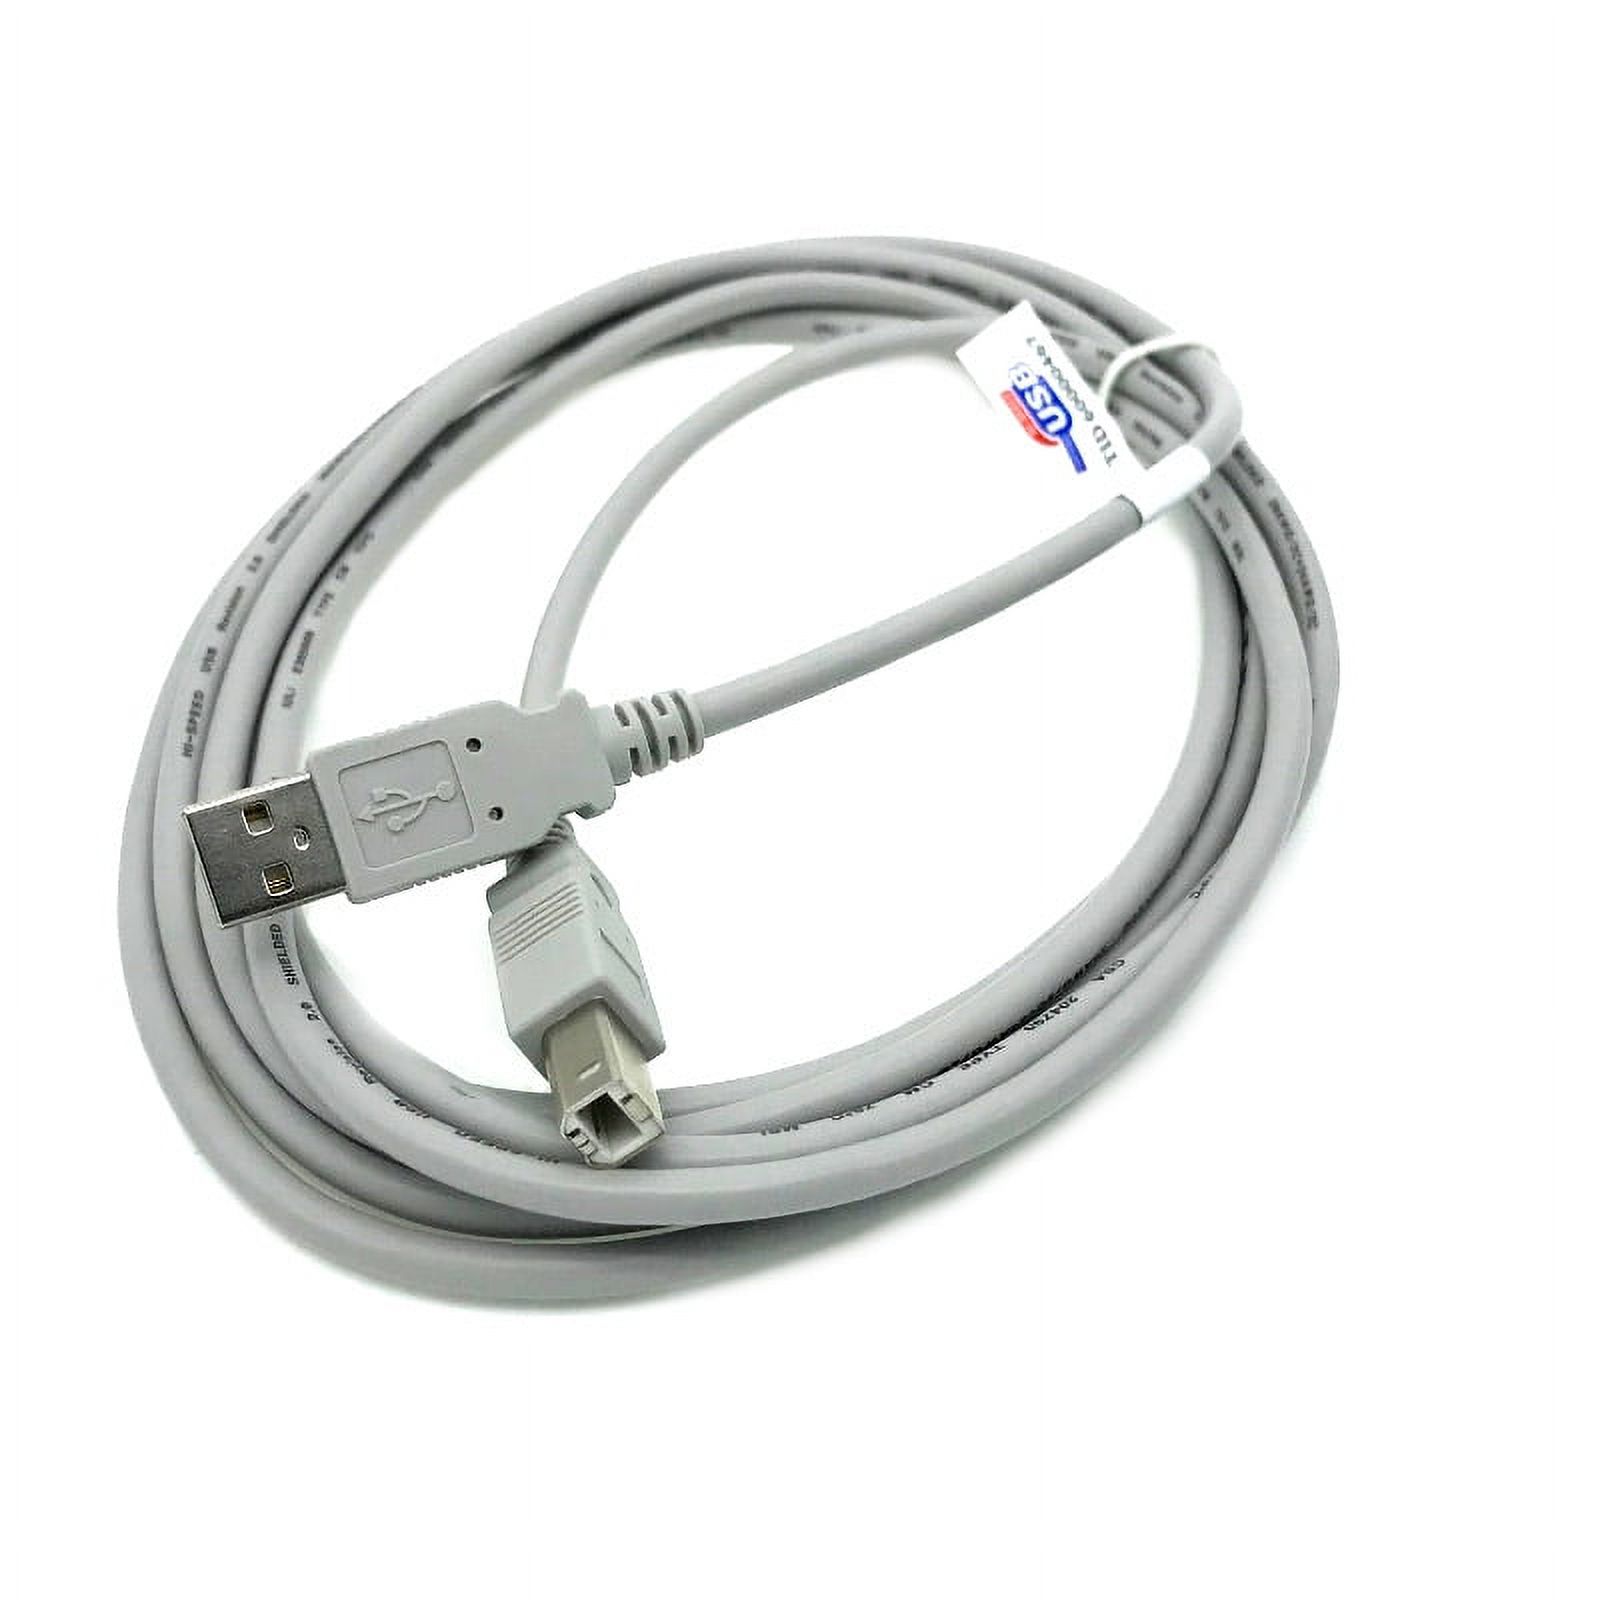 Kentek 10 Feet FT USB Cable Cord For NATIVE INSTRUMENTS TRAKTOR KONTROL TURNTABLE MIXER S5 D2 Z2 Beige - image 1 of 1